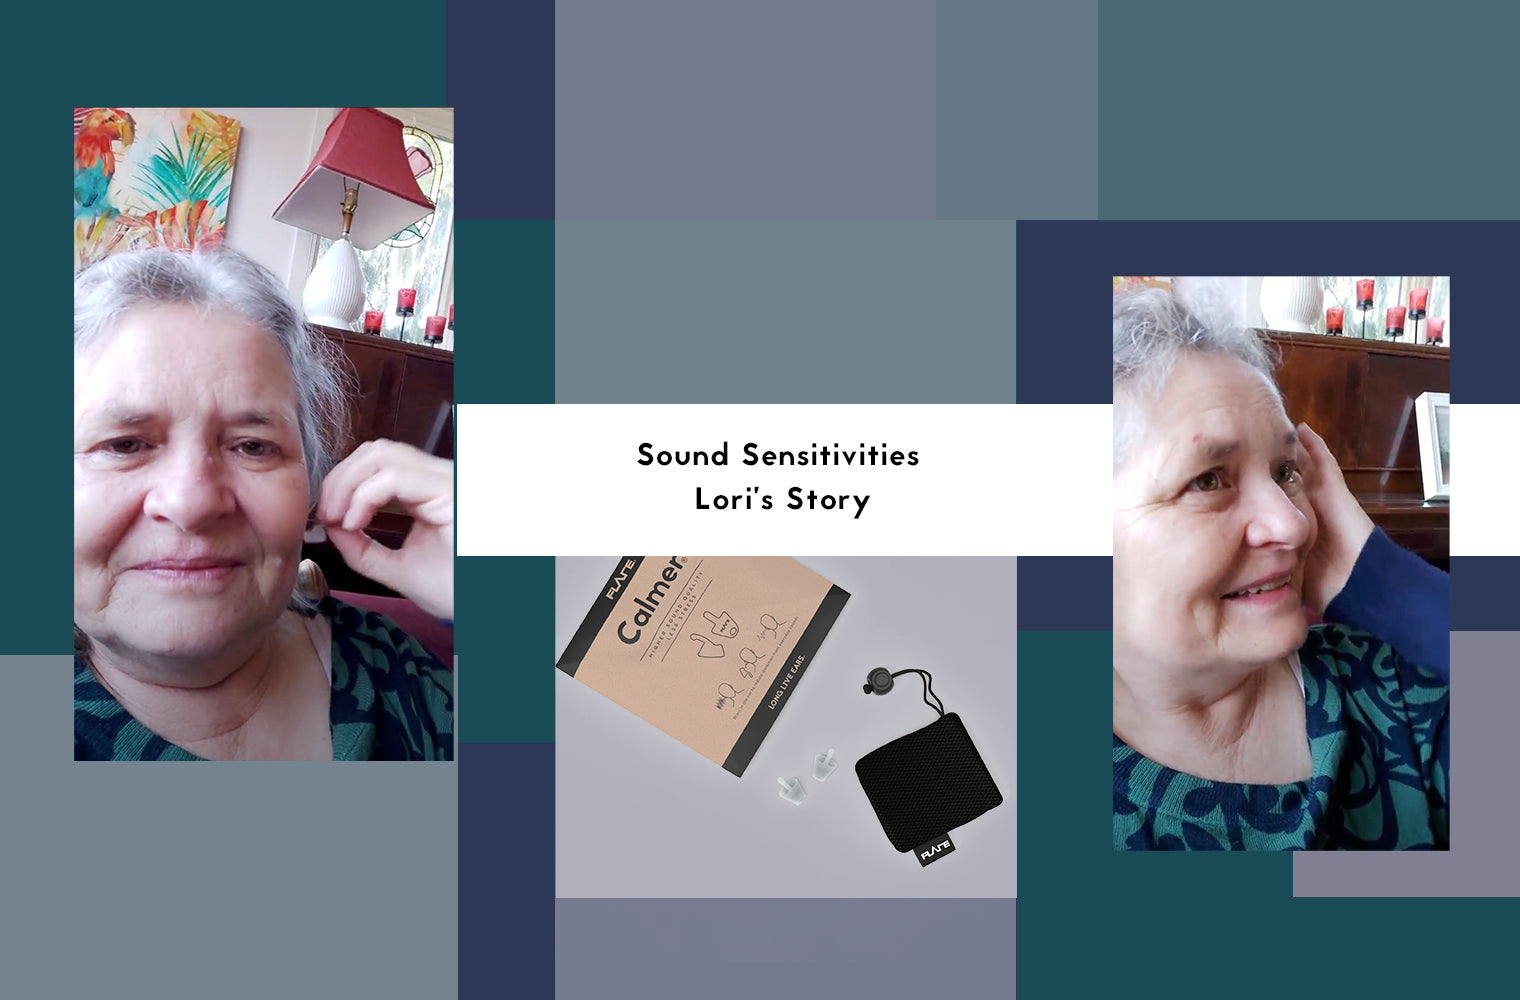 Sound Sensitivities and Calmer: Lori's Story